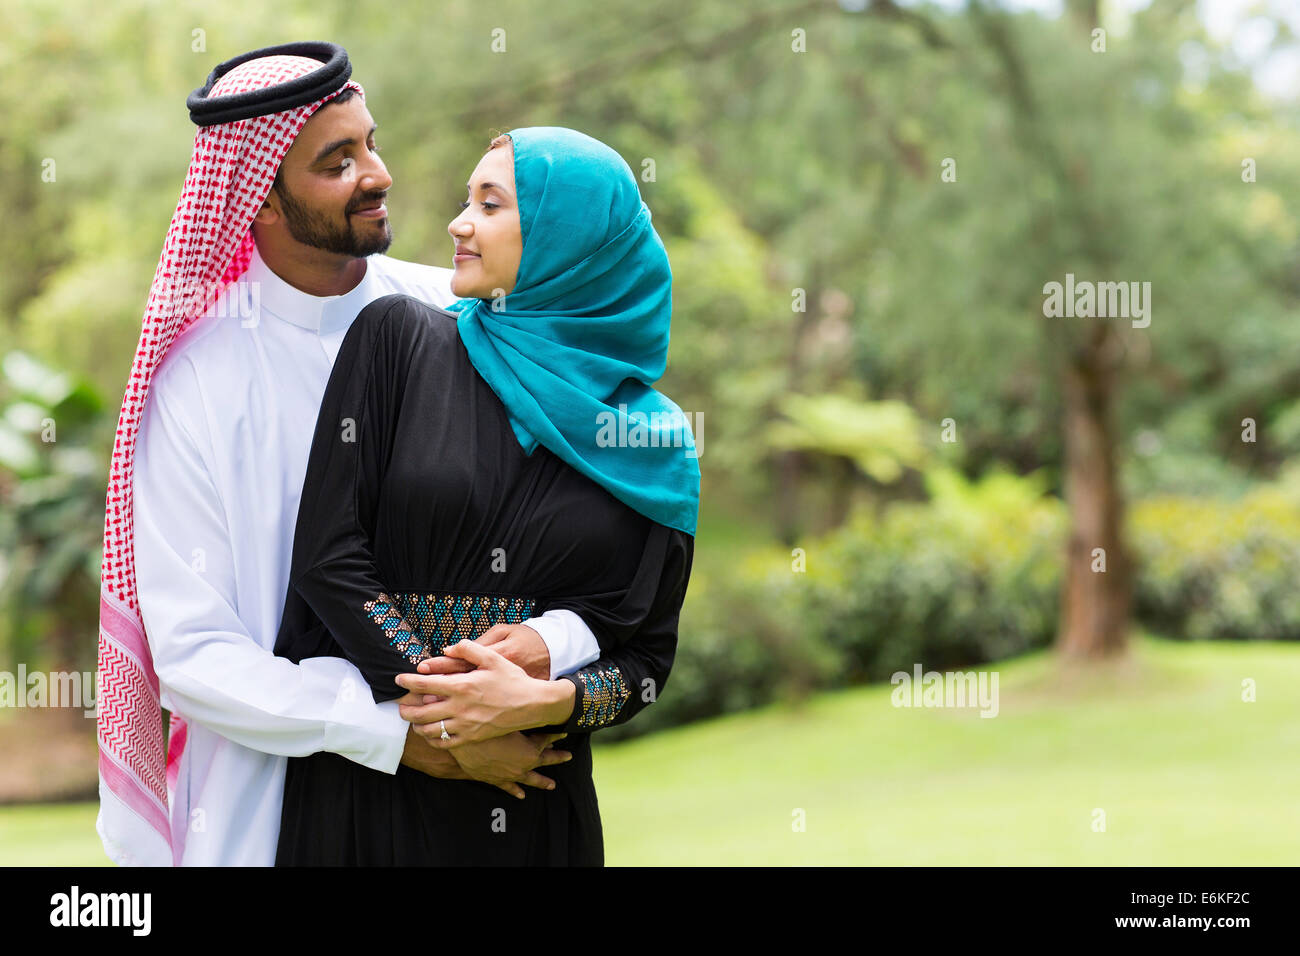 Friendship saudi arabia girl Date Women